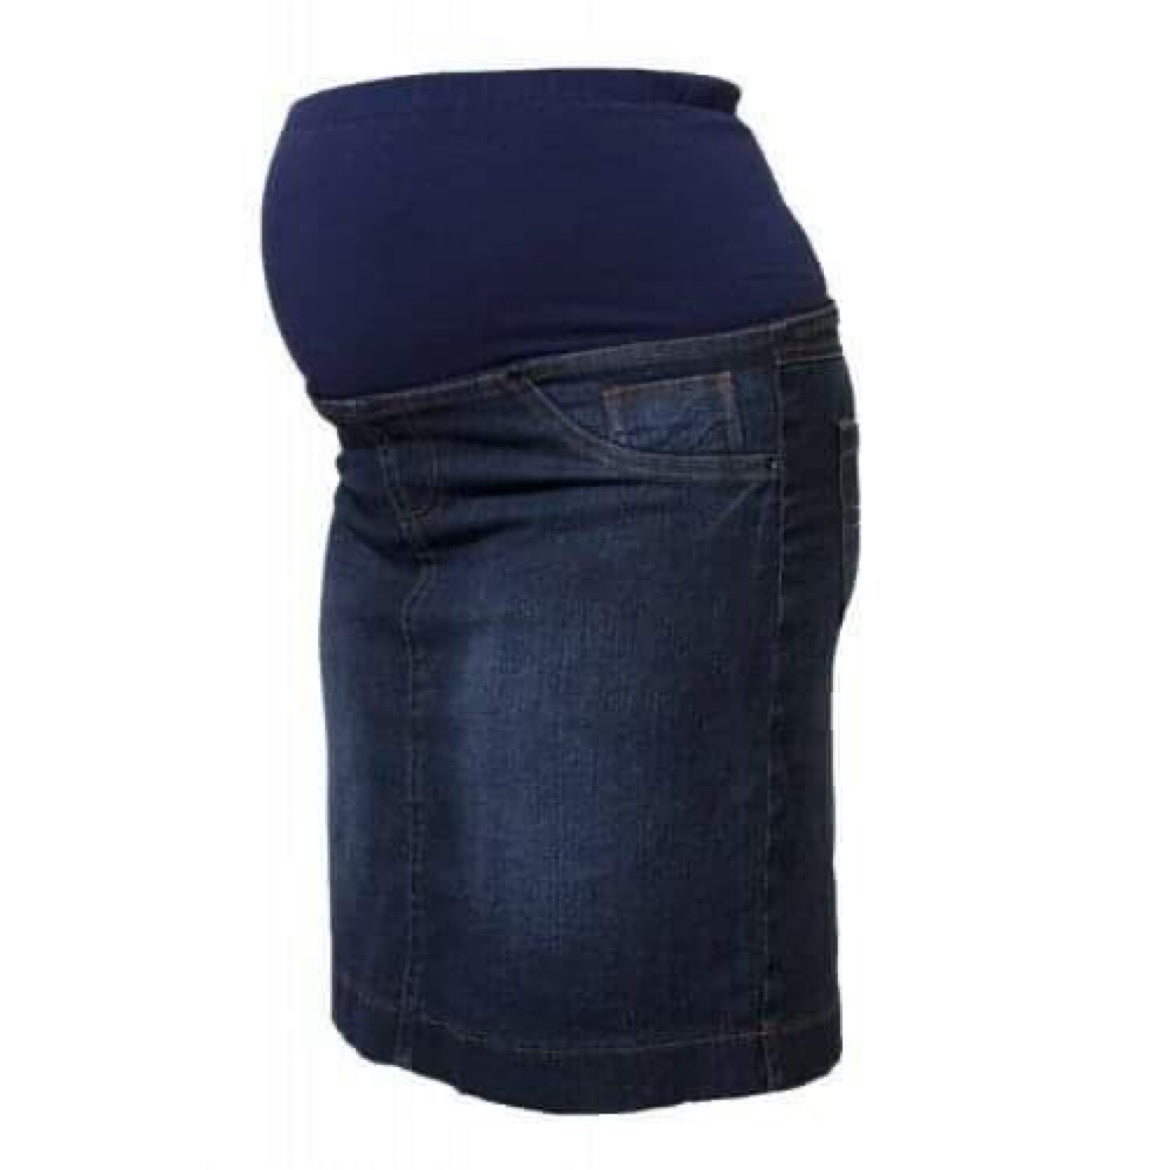 Born Maternity Casual Comfy Affordable Quality Denim Skirt